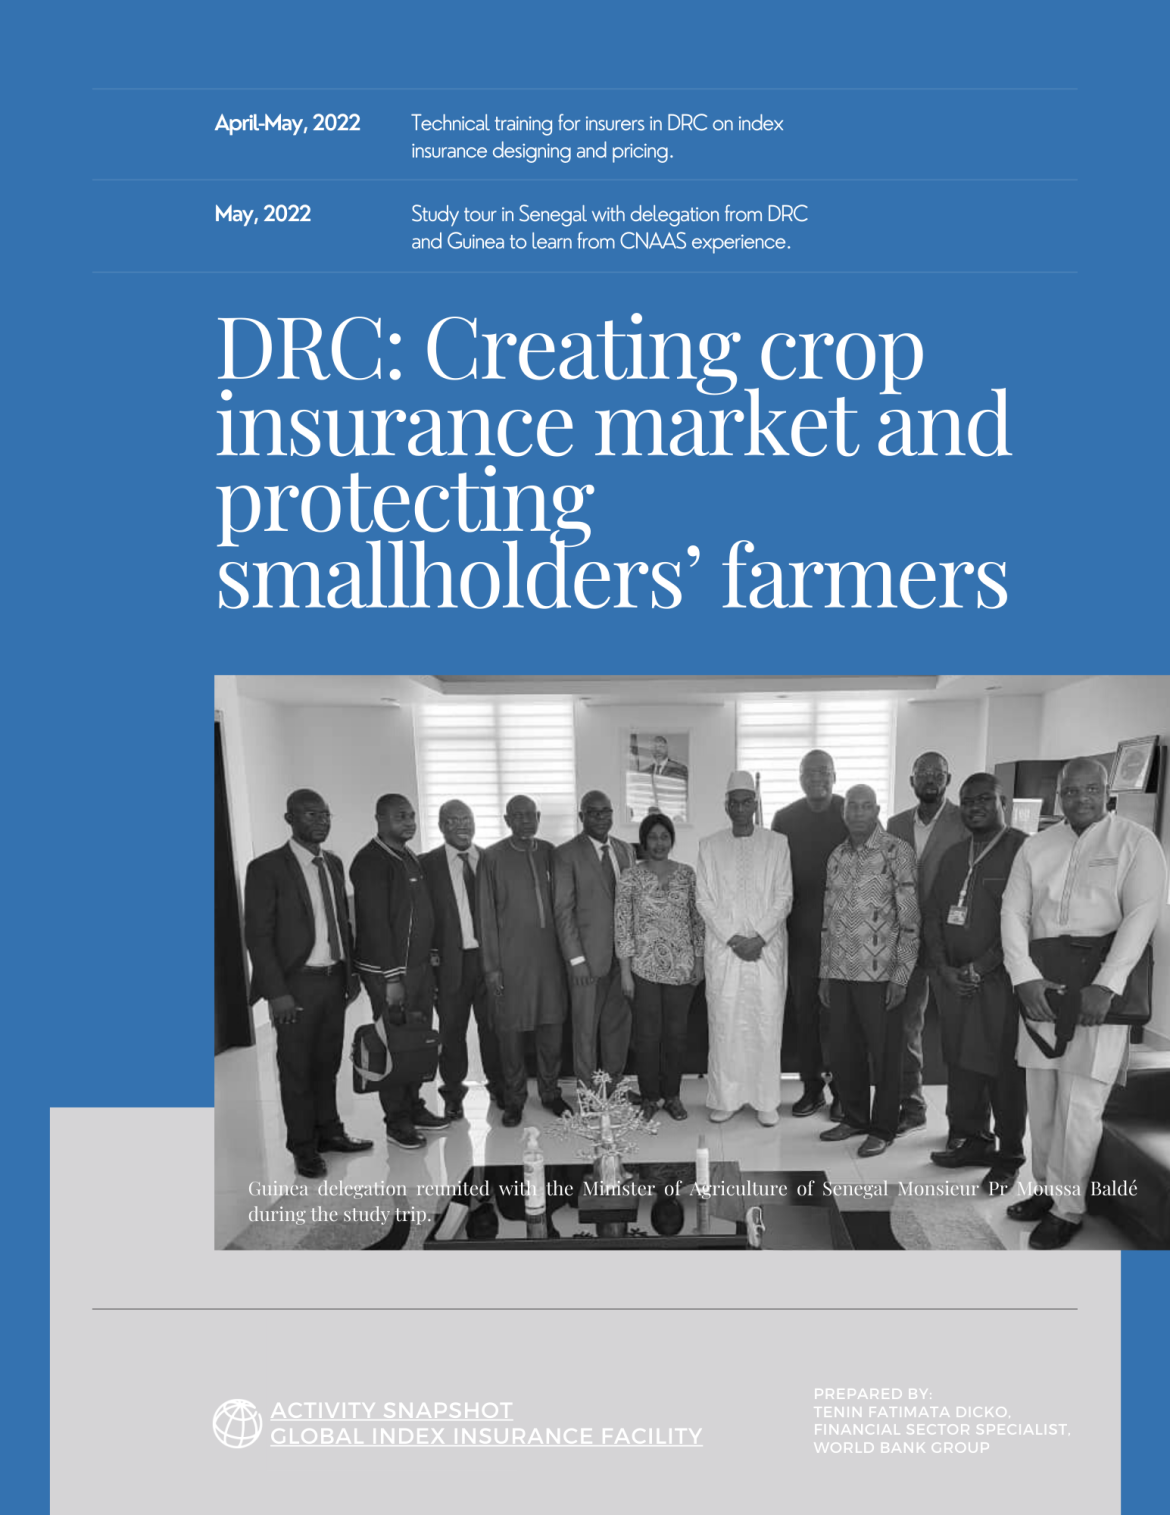 Embark MGA chooses DRC Insurance Platform for its property policy